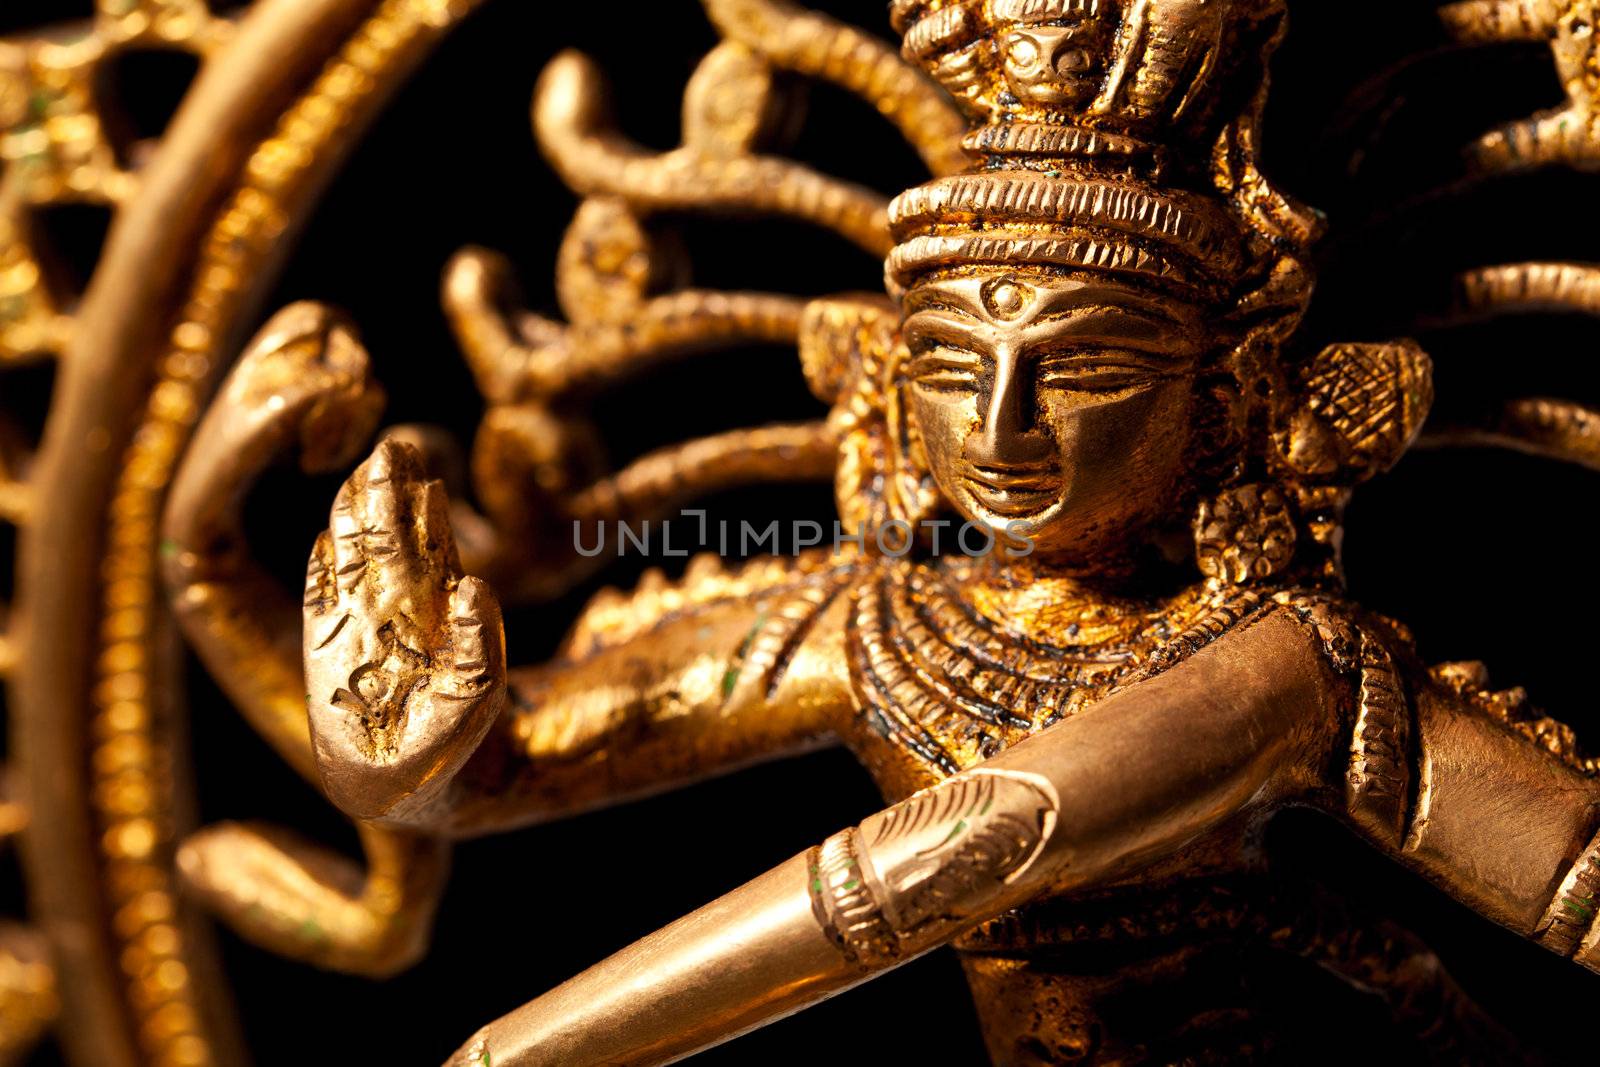 Statue of indian hindu god Shiva Nataraja - Lord of Dance by dimol